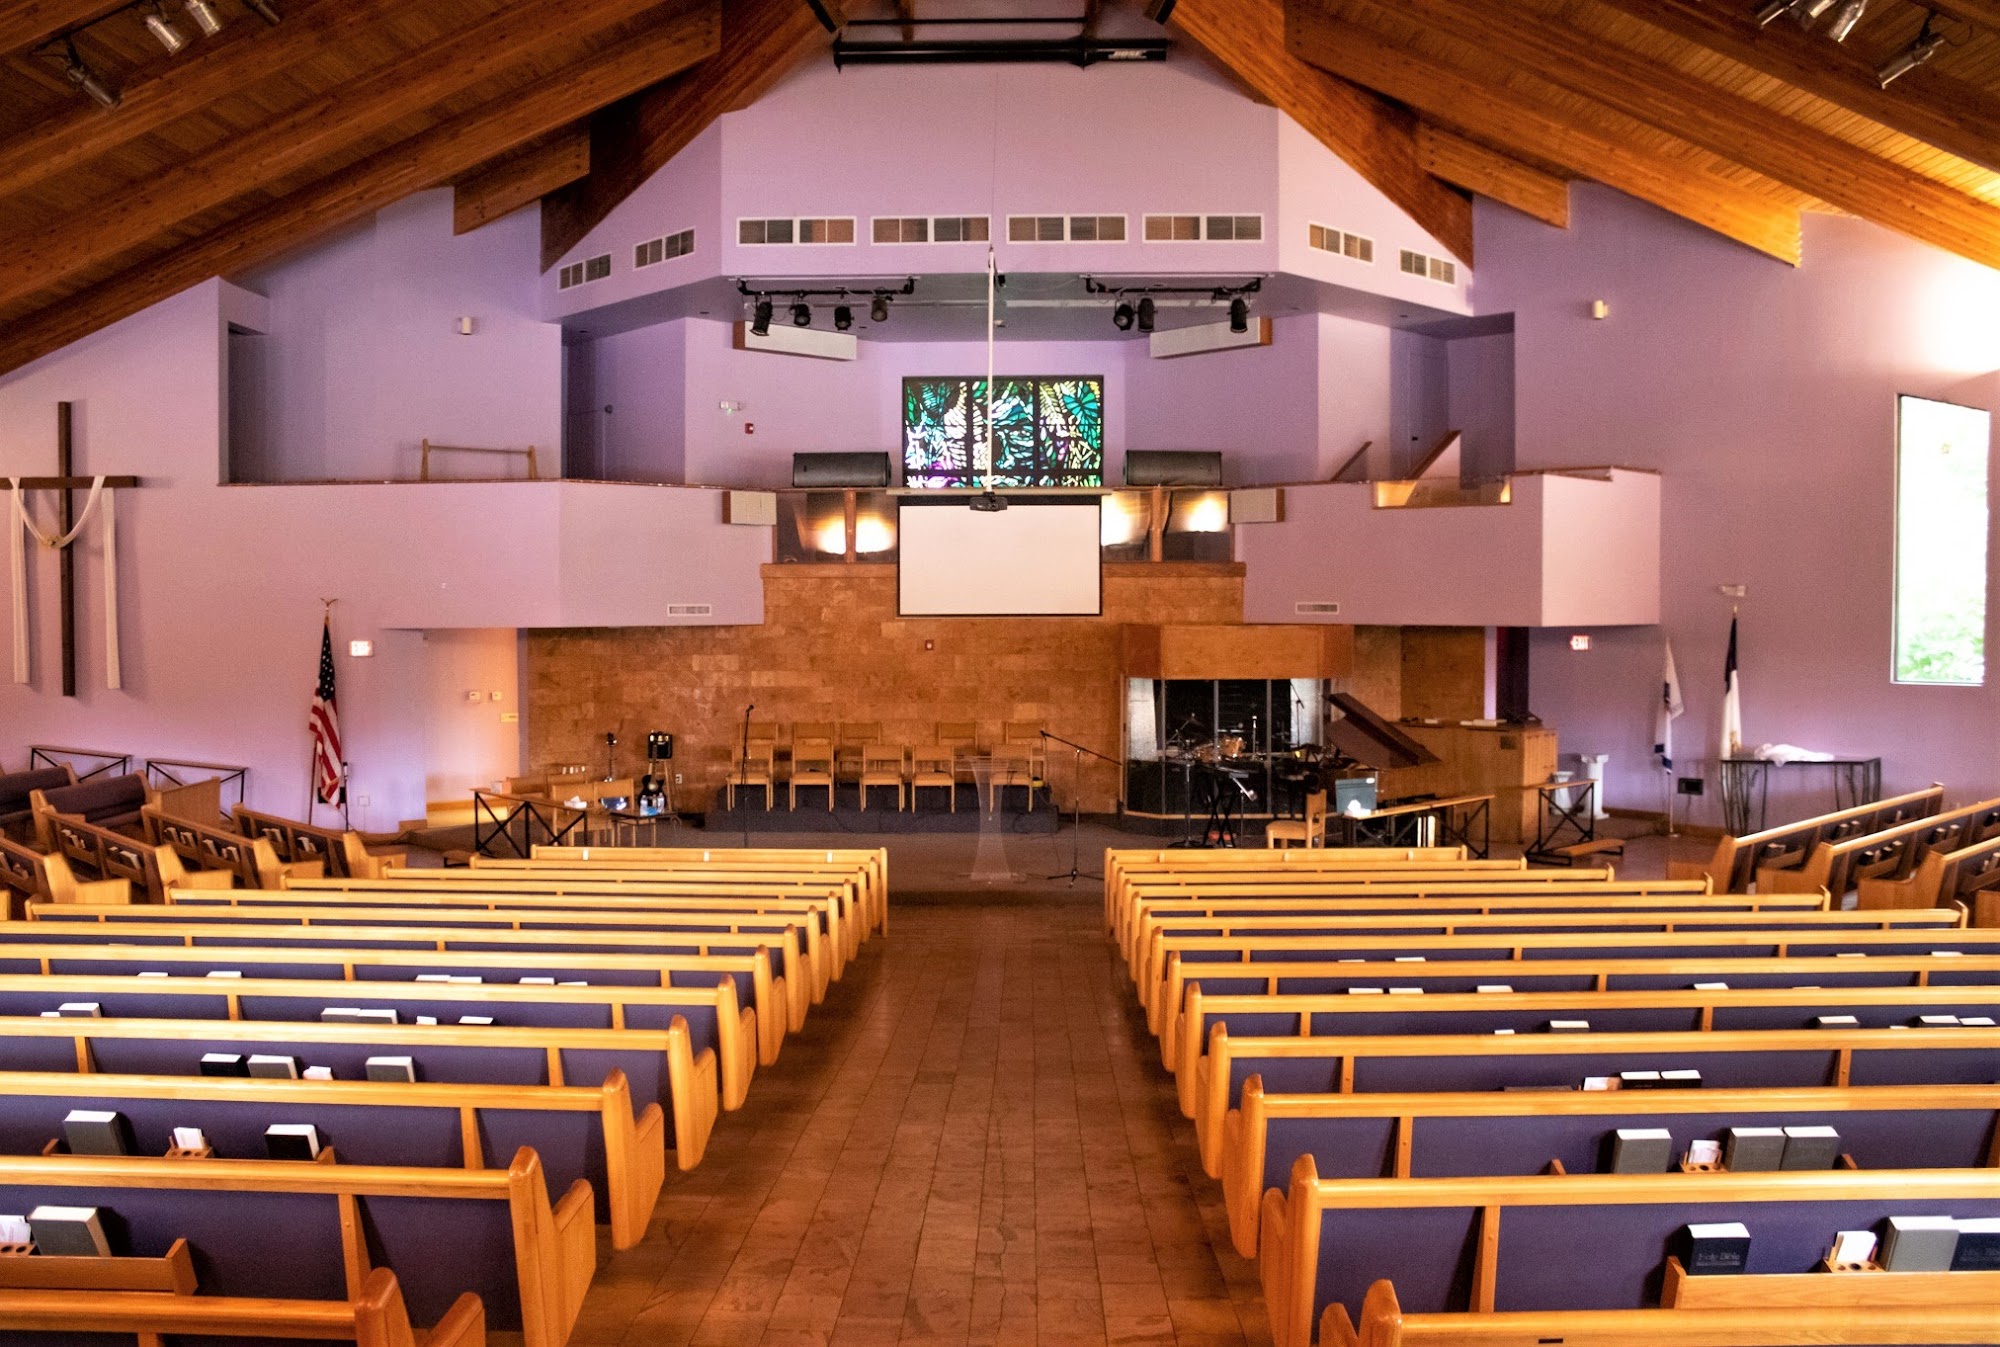 Kendall Church of God